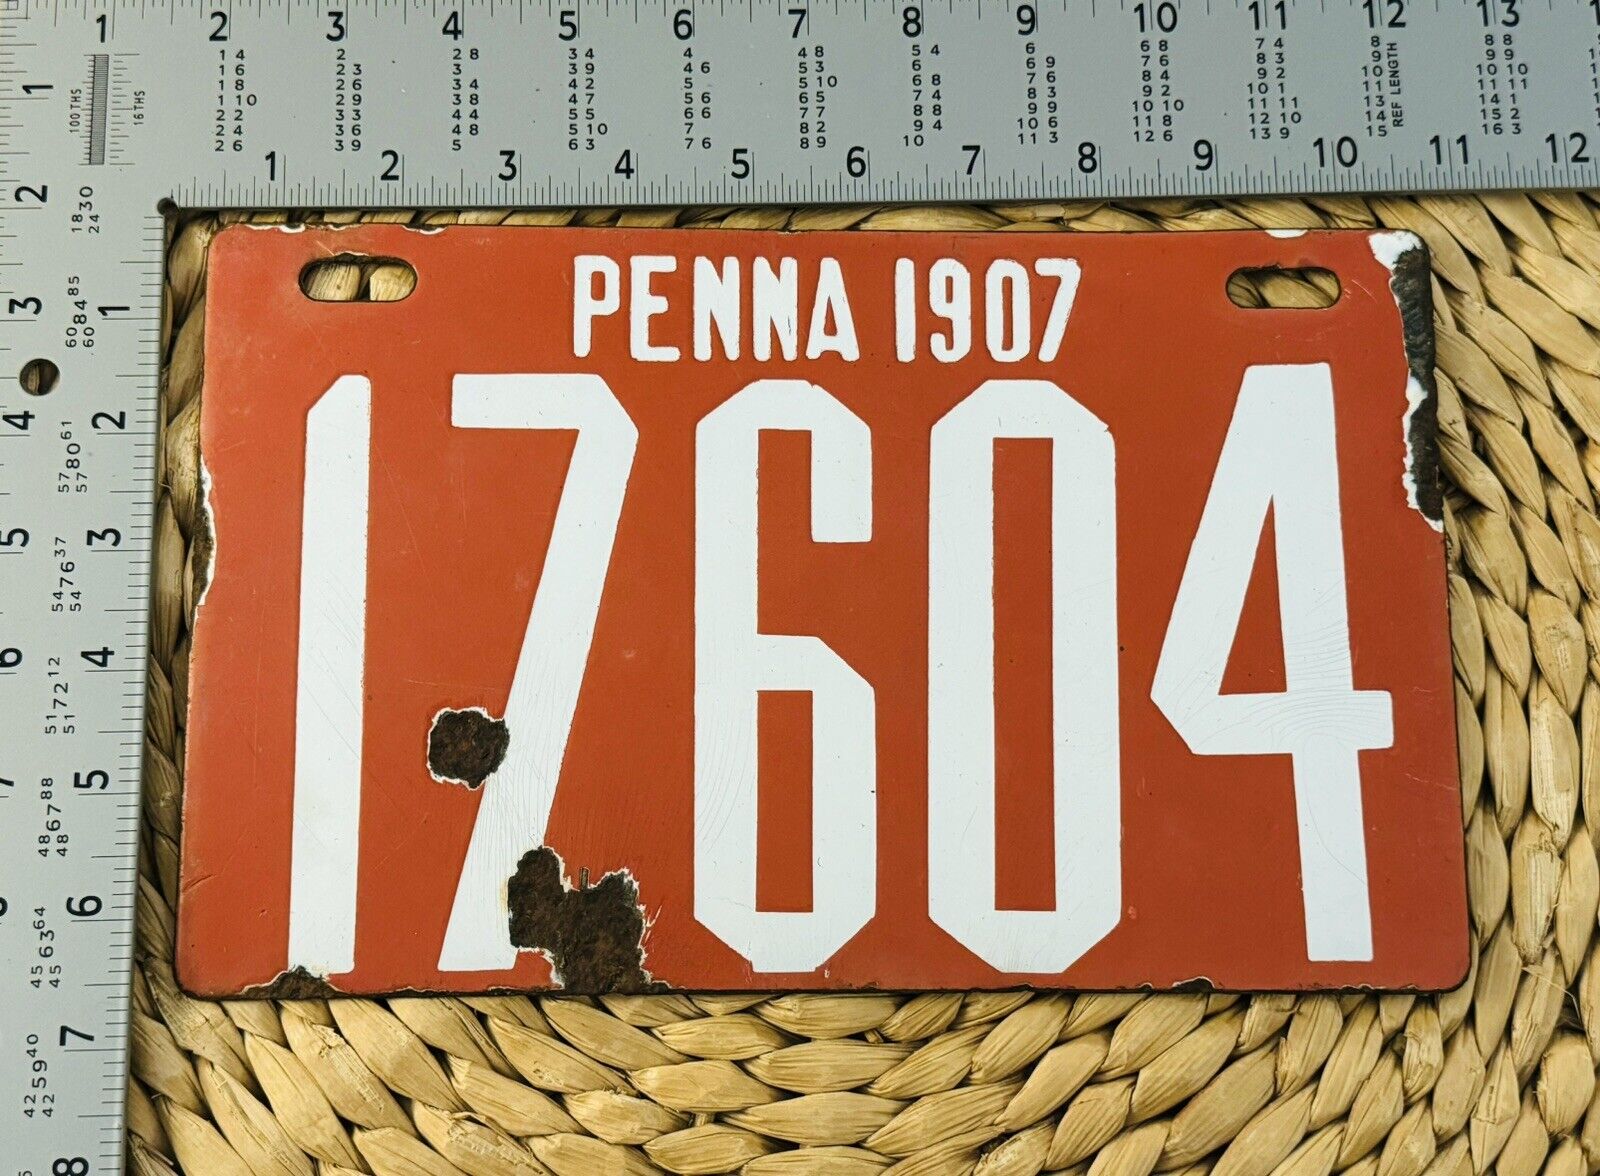 1907 Pennsylvania Porcelain License Plate 17604 ALPCA STERN CONSIGNMENT